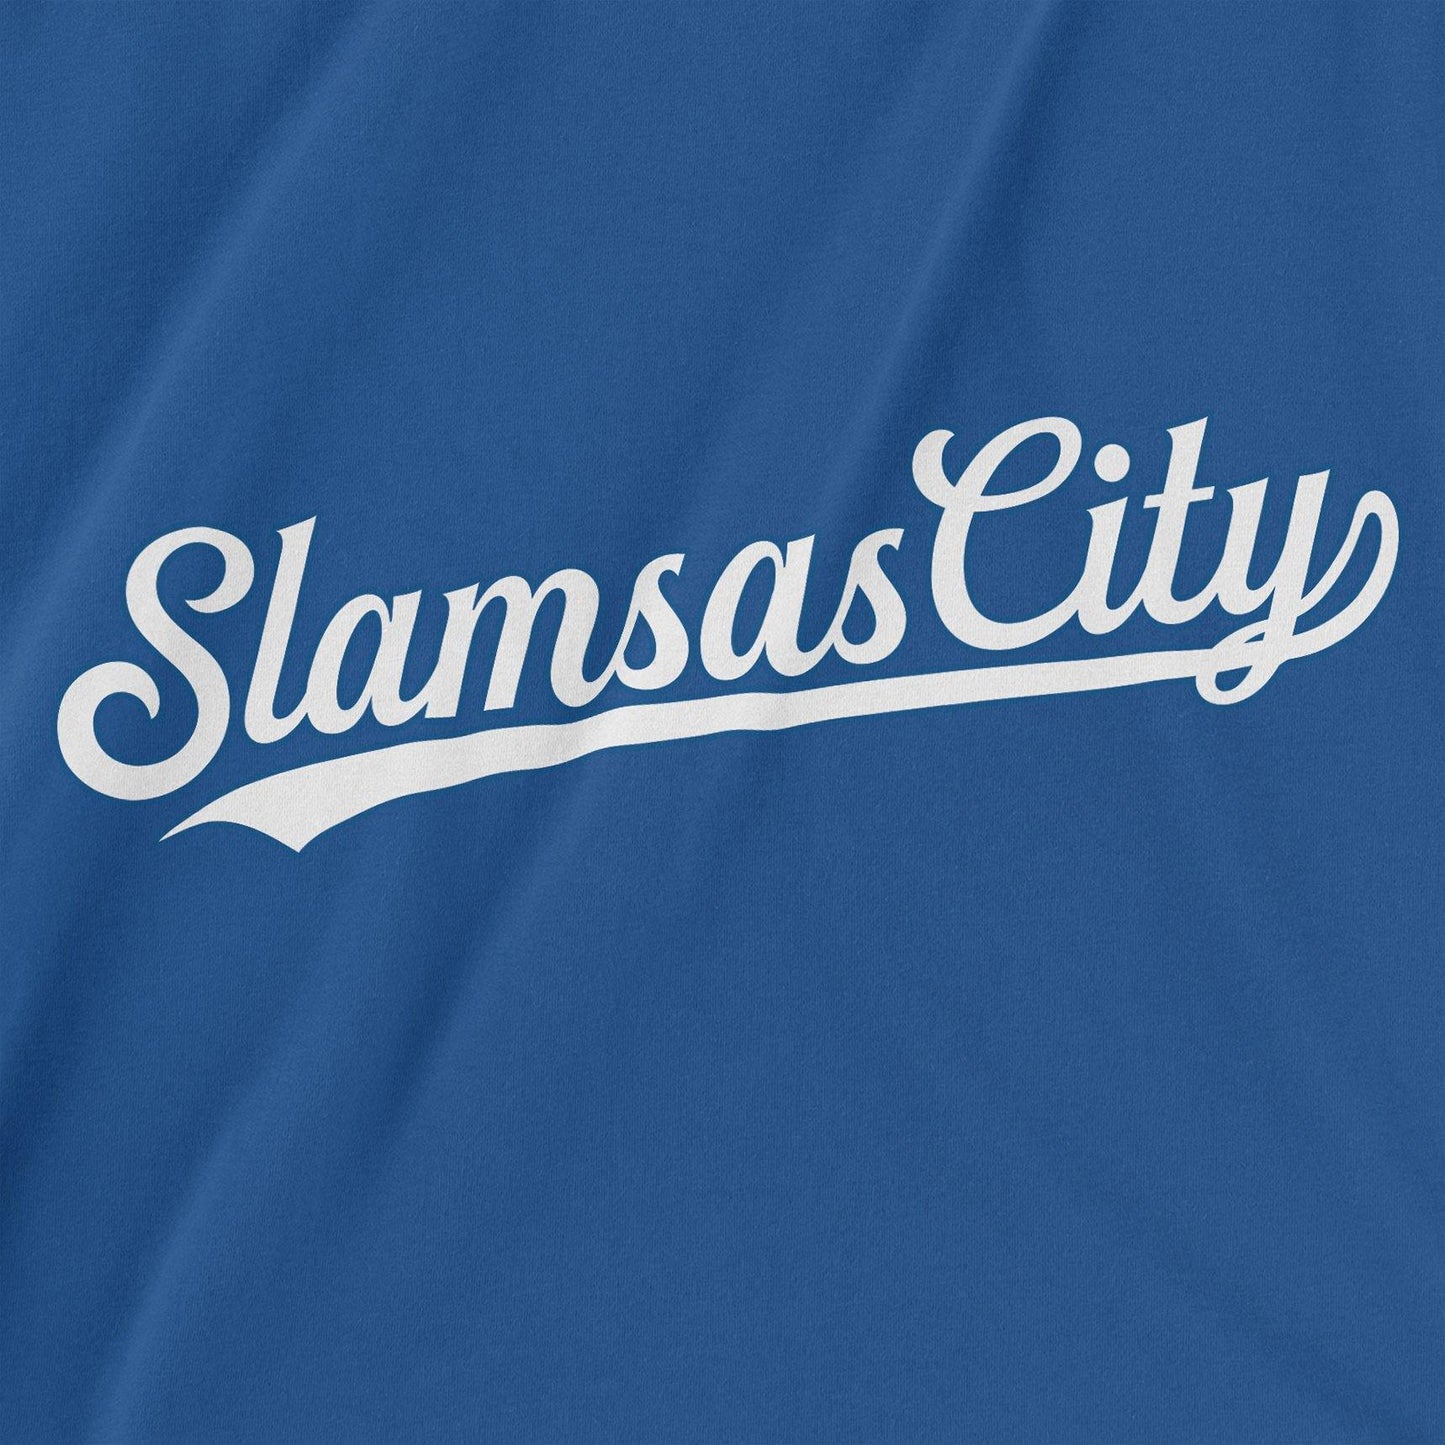 Slamsas City | T-Shirt - Jomboy Media